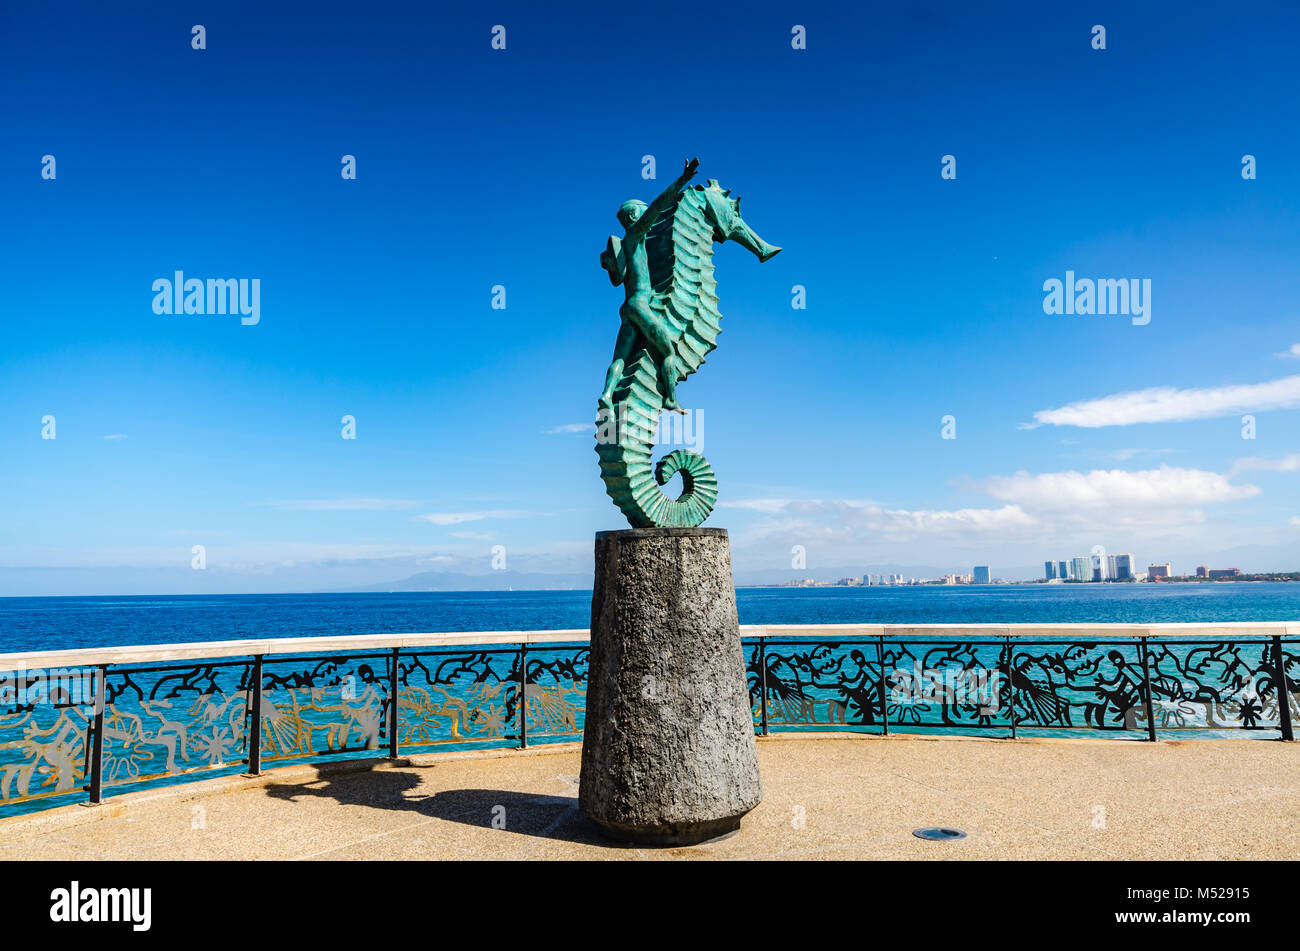 Iconic verdigris green bronze sculpture entitled 'The Boy on the Seahorse' by Rafael Zamarripa on artwalk along Malecon in Puerto Vallarta. Stock Photo